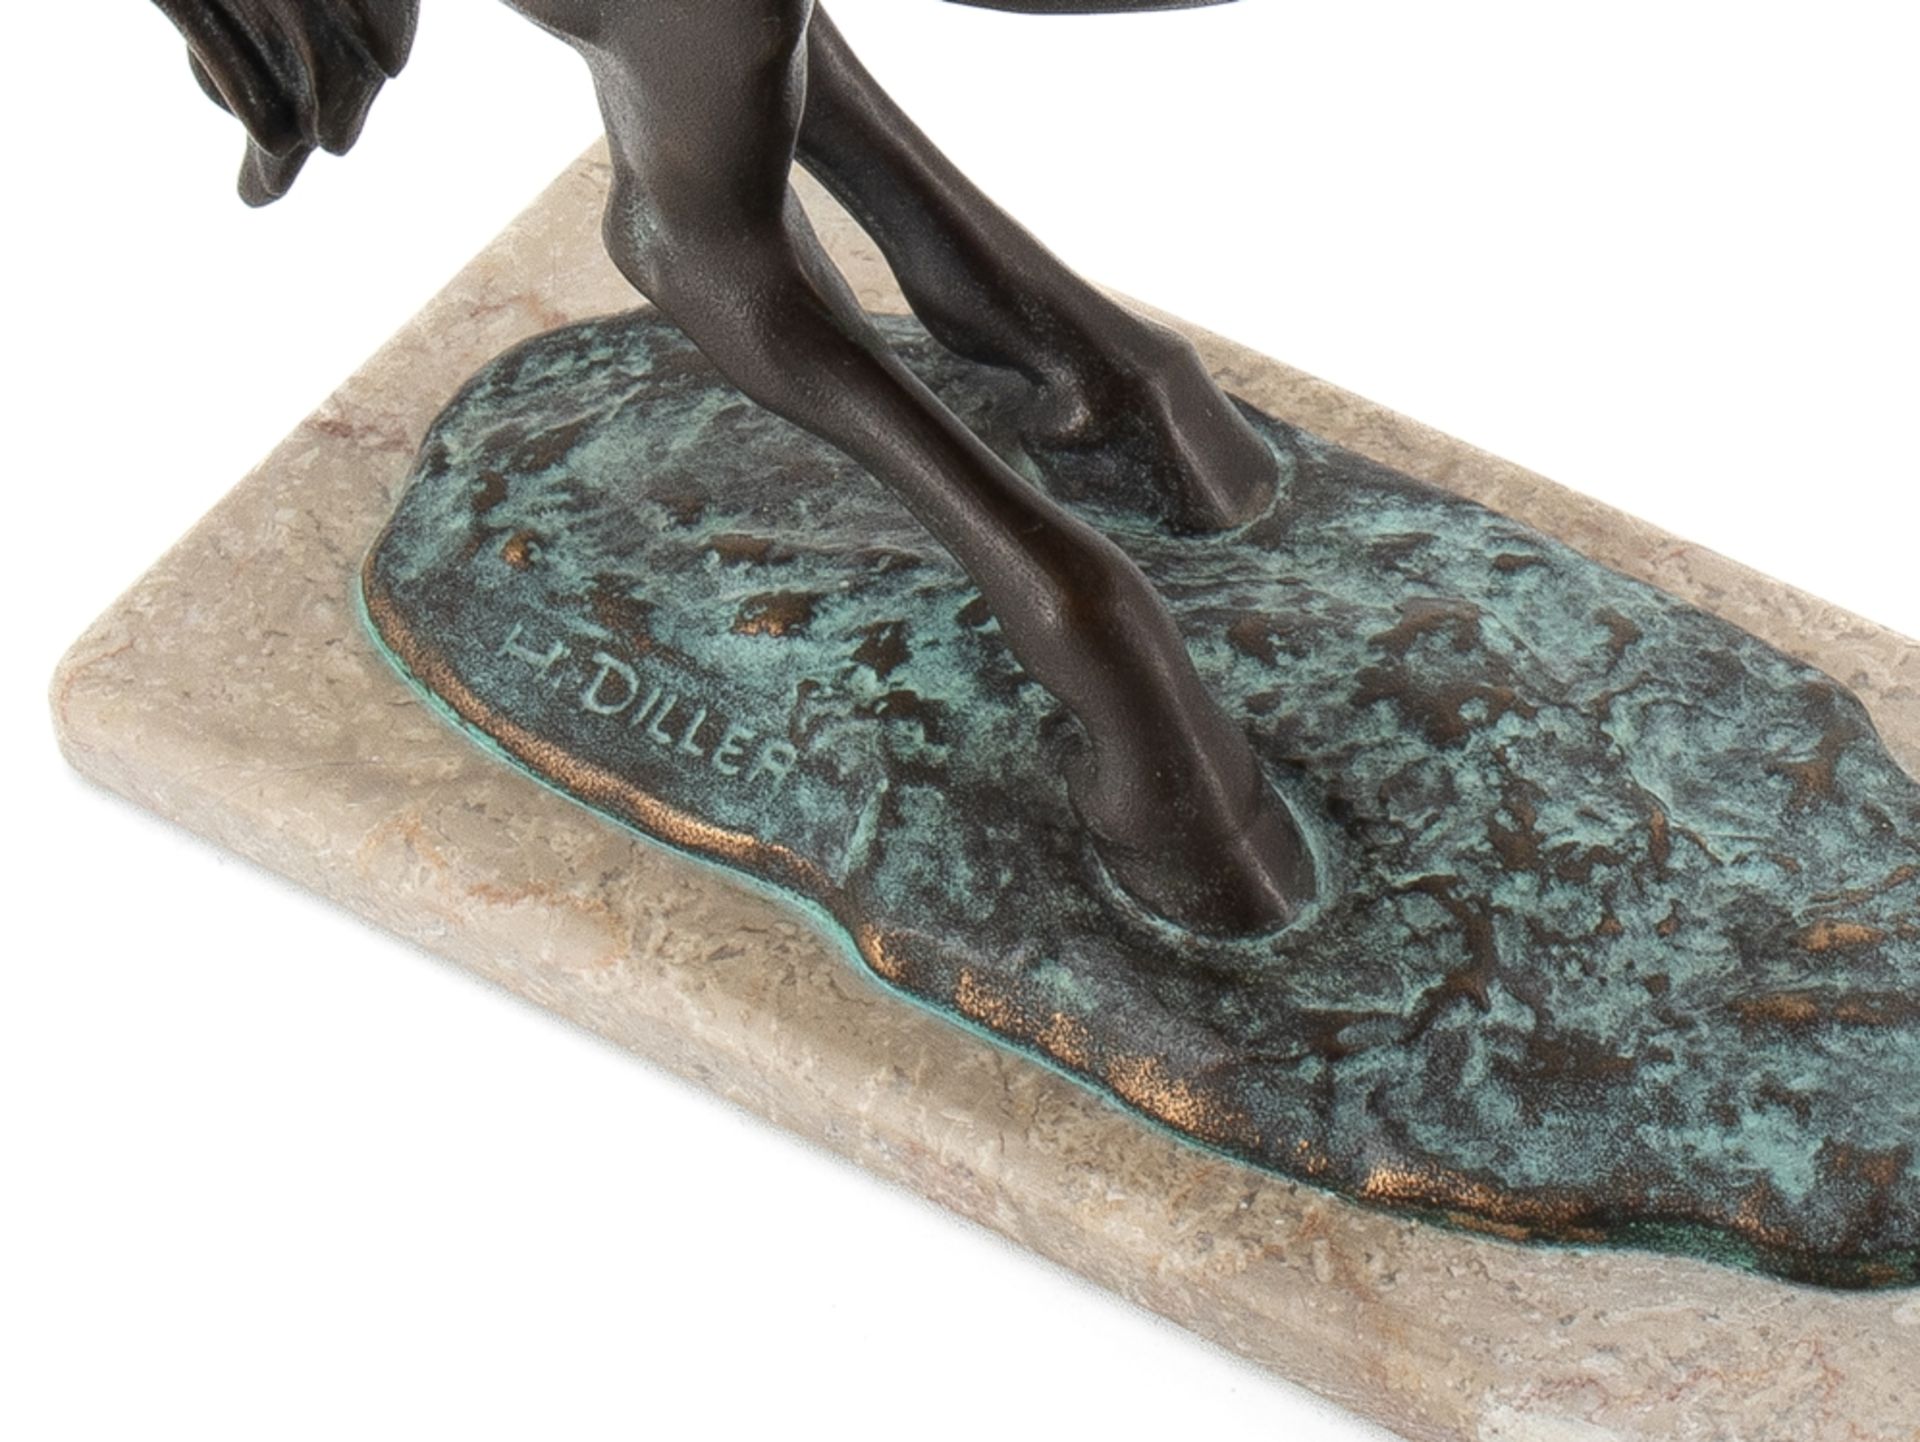 Diller Helmut (1911 - 1984), Bronze sculpture "Steigendes Pferd" (Rising Horse) - Image 9 of 9